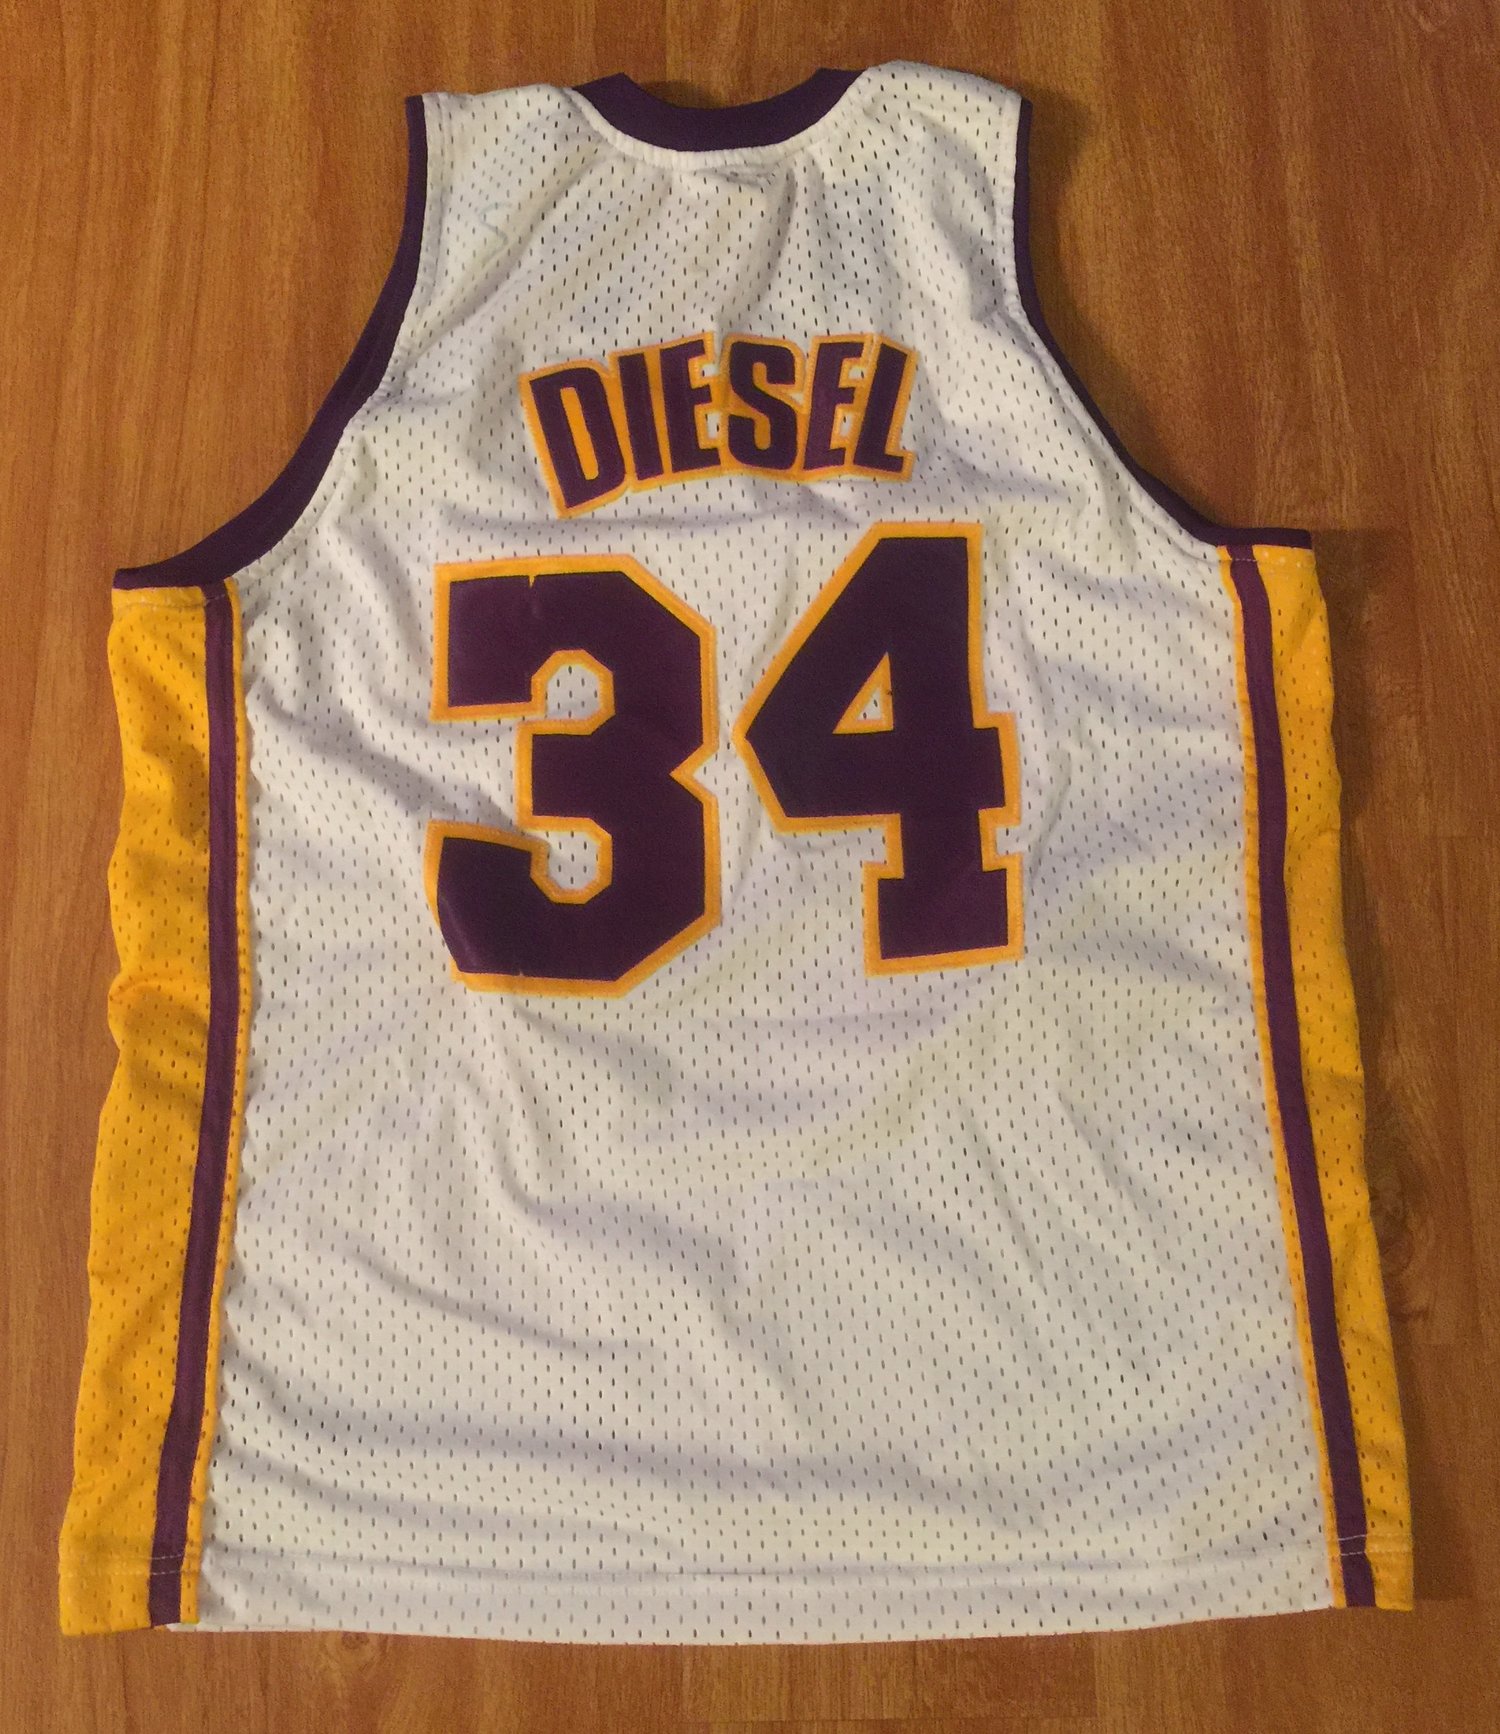 Shaq - Diesel” Basketball Jersey